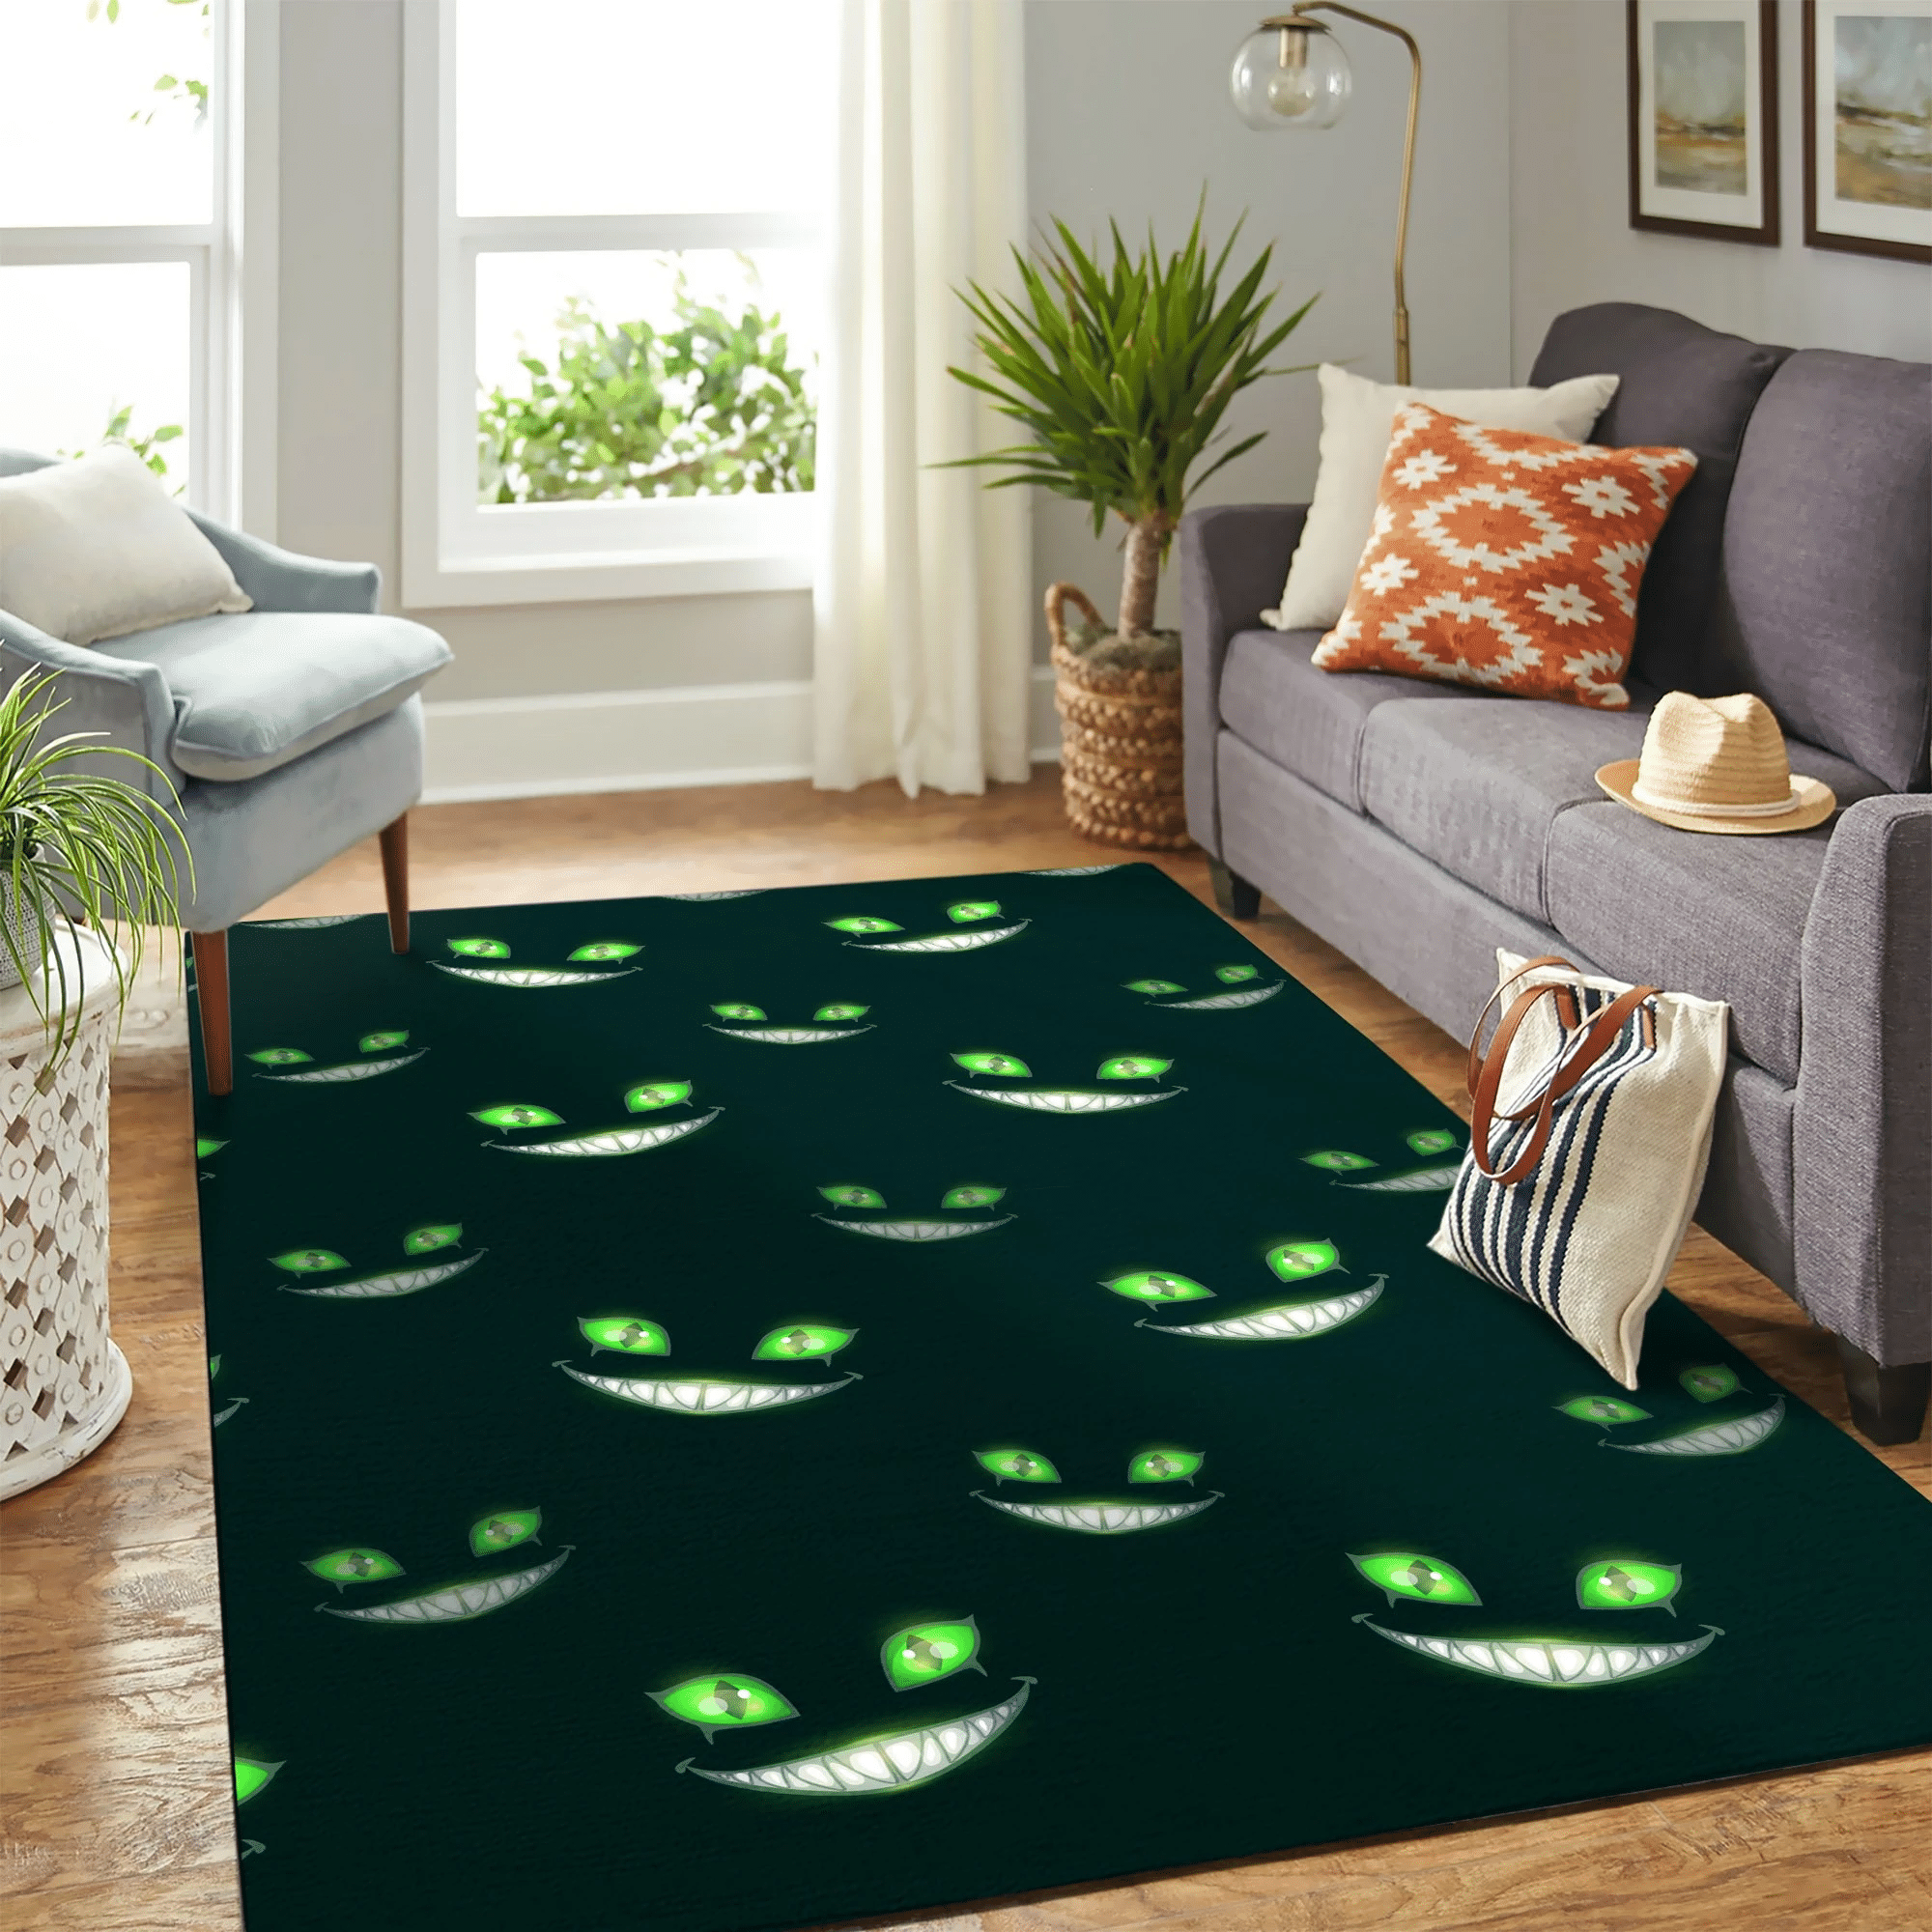 Cat Creepy Green Eyes Carpet Rug Chrismas Gift - Indoor Outdoor Rugs 1